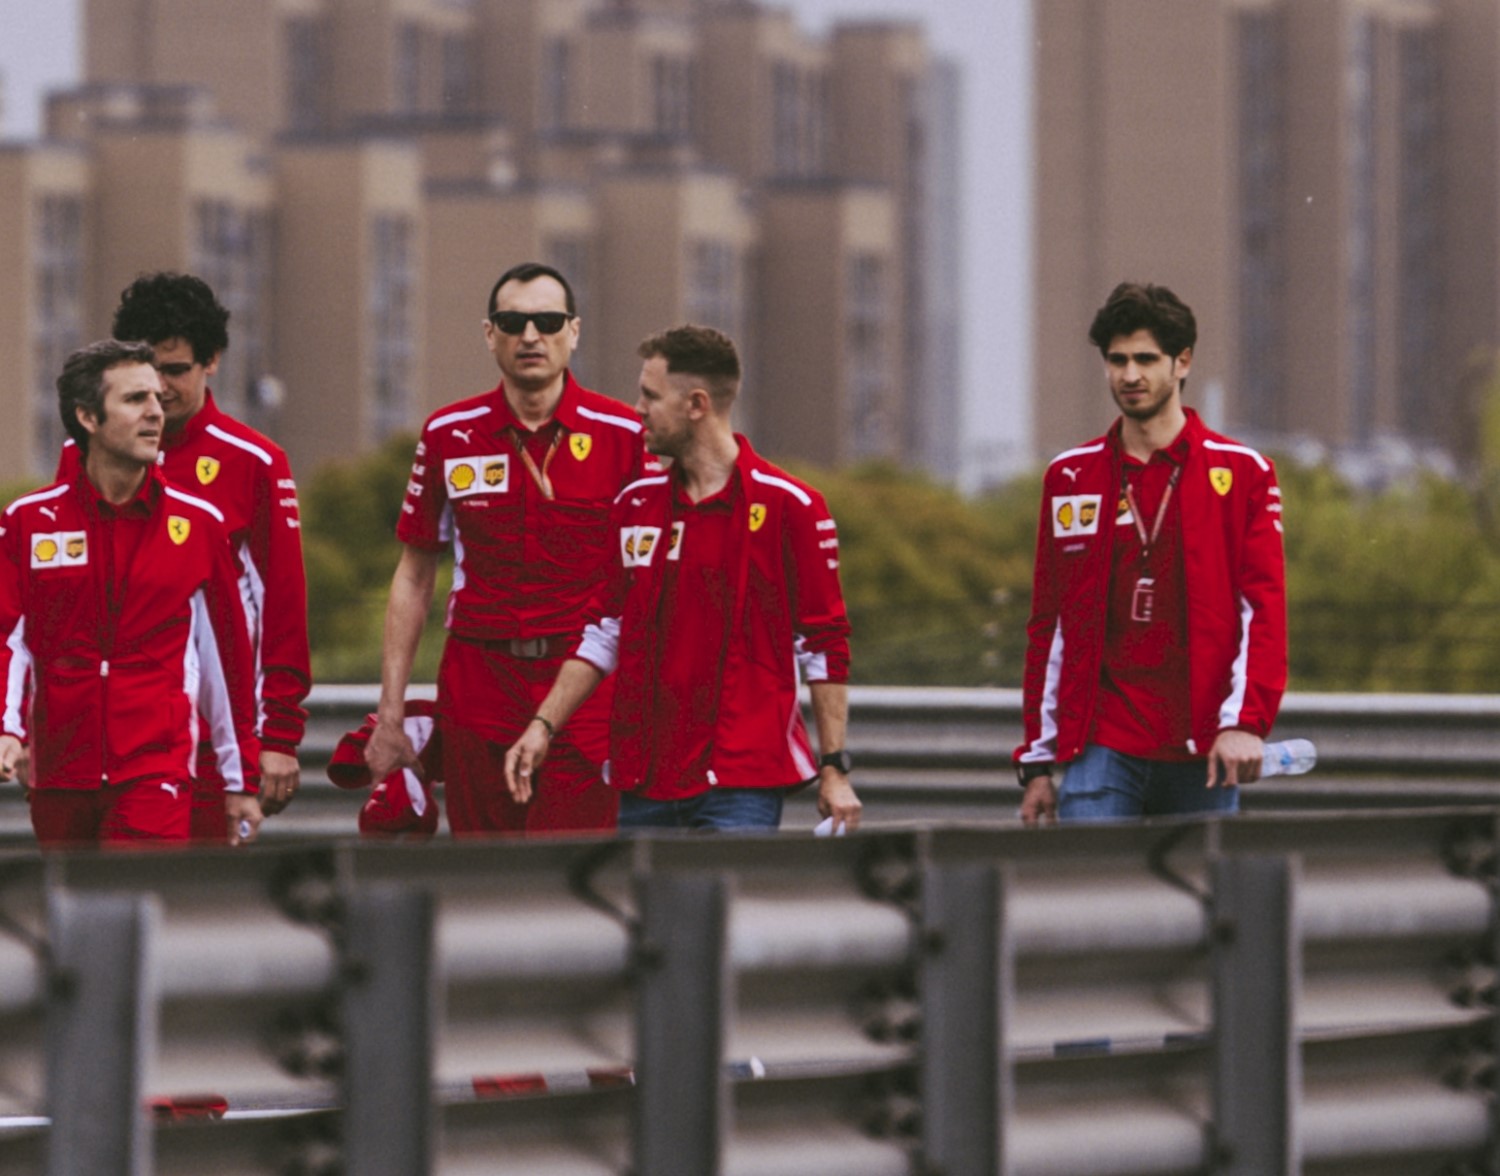 Vettel sporting shorter haircut on track walk with Ferrari crew in Shanghai